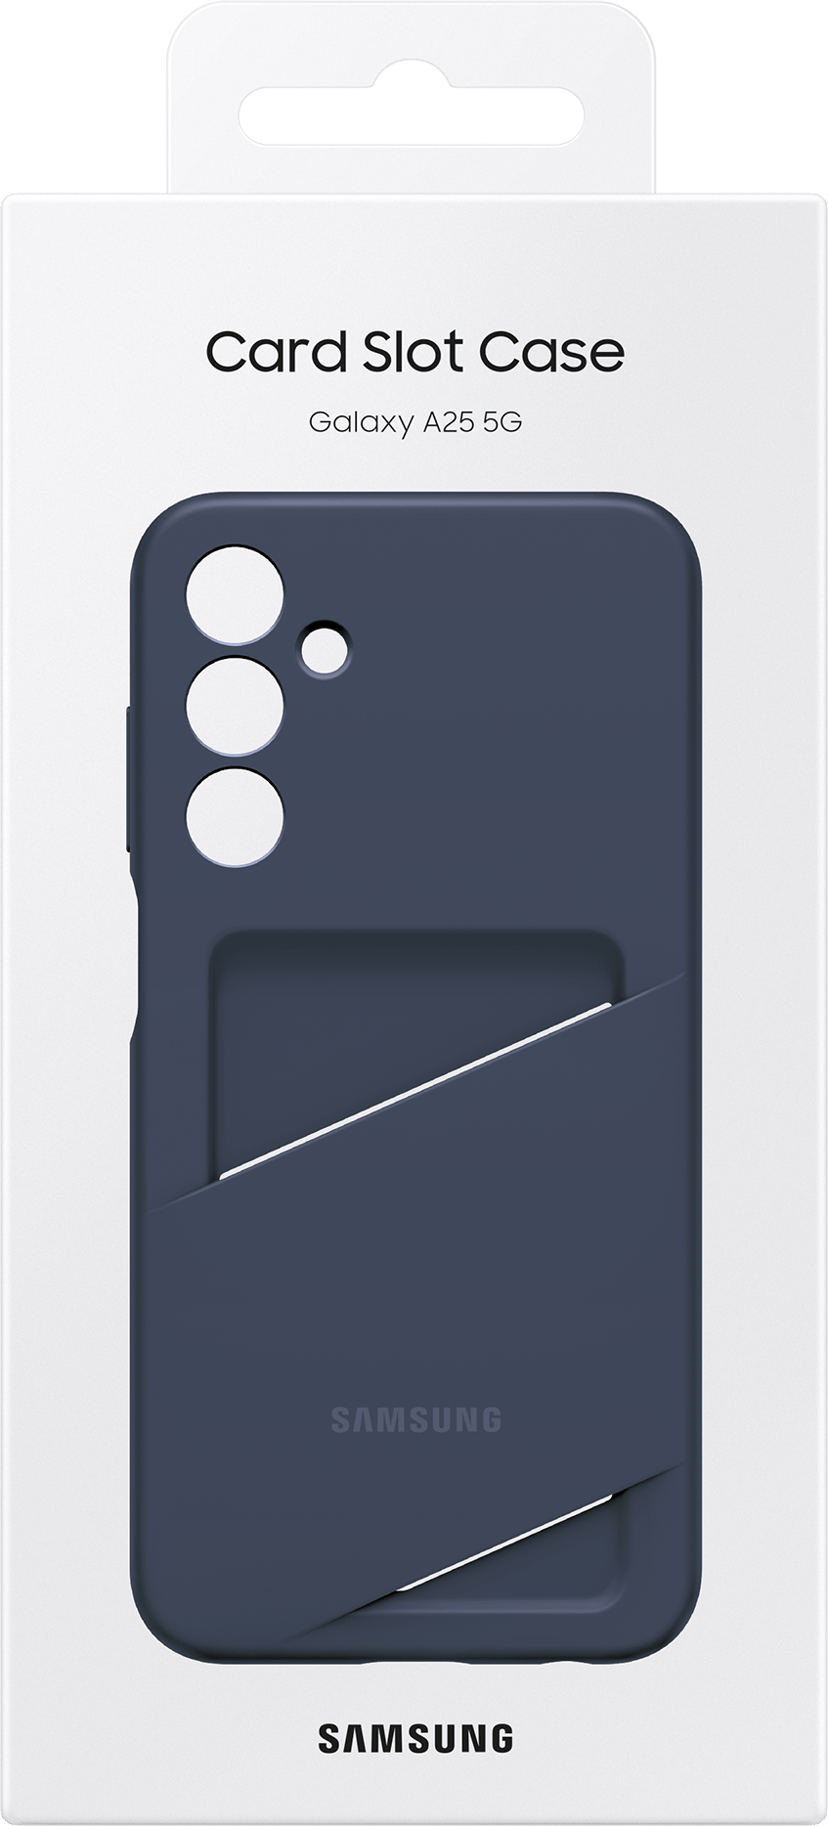 Samsung Card Slot Case Galaxy A25 5G Musta, Sininen